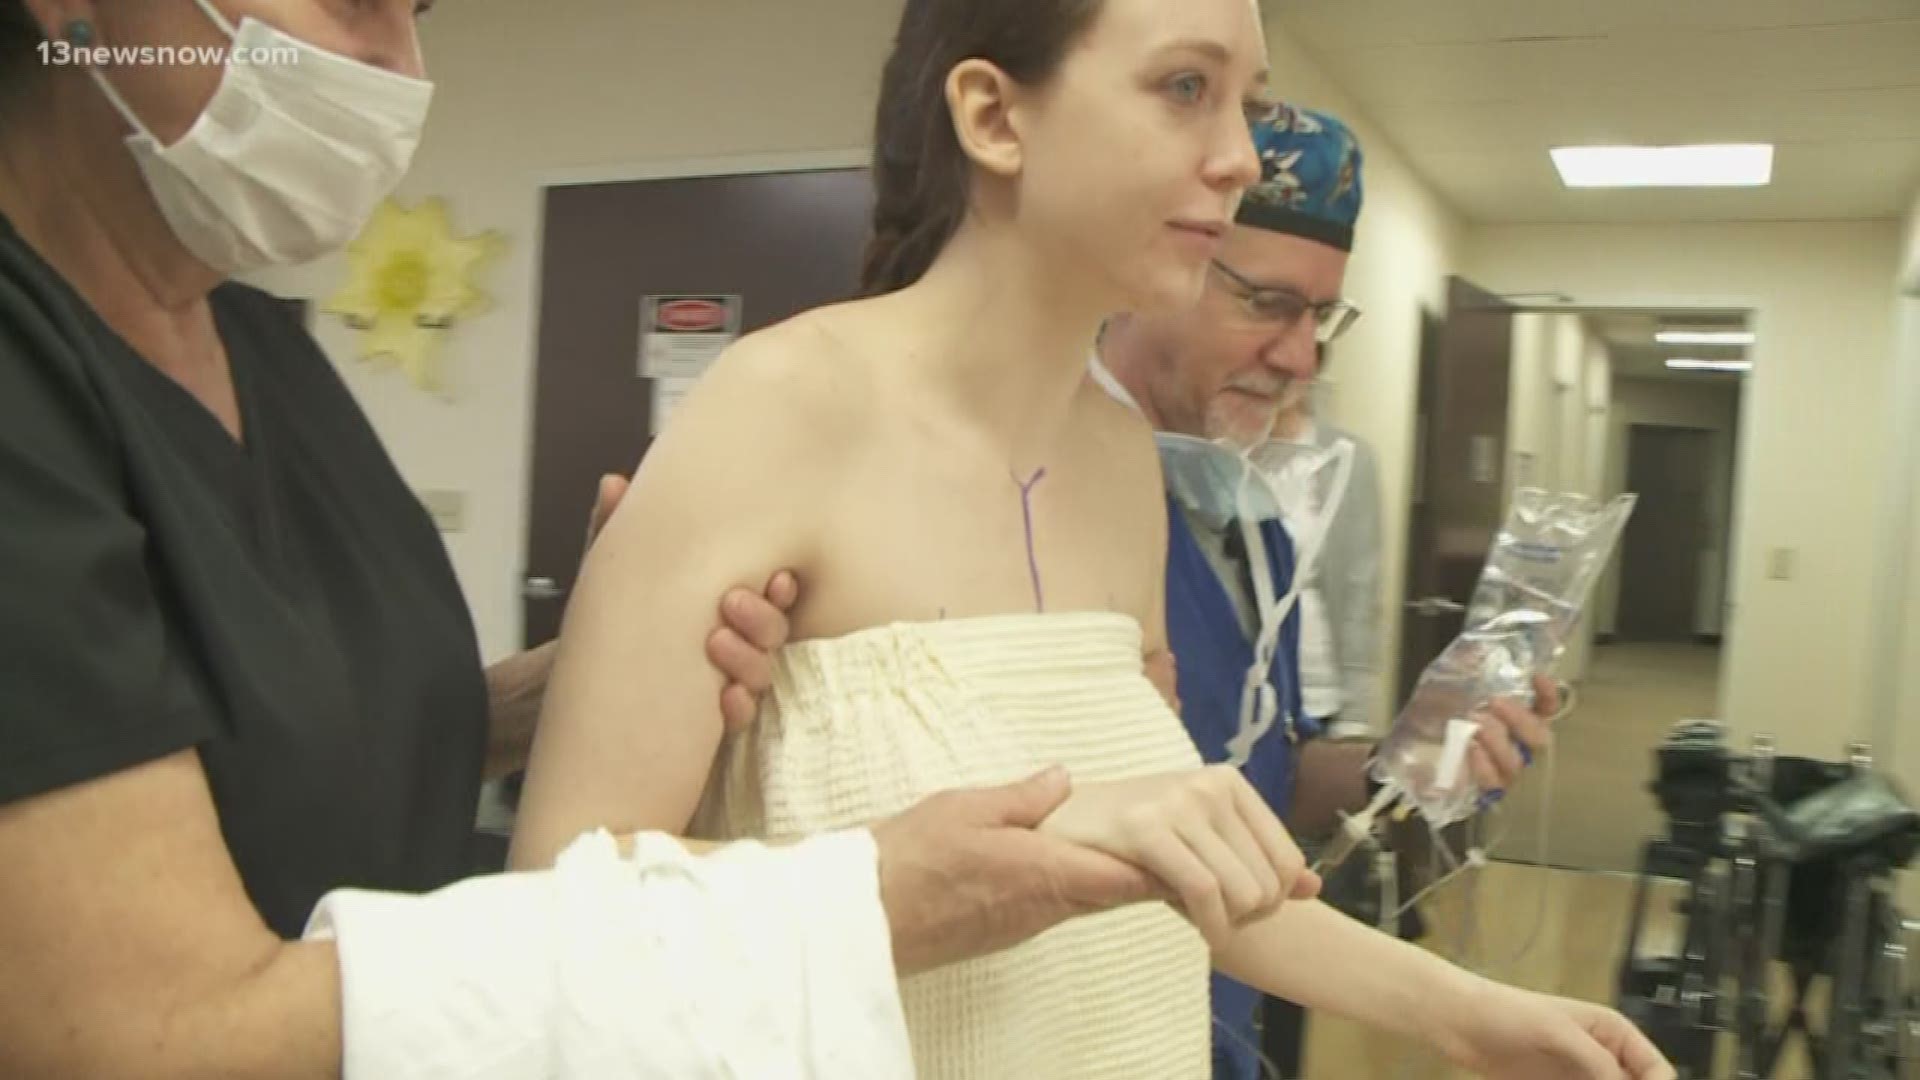 Local doctors warn of textured breast implants